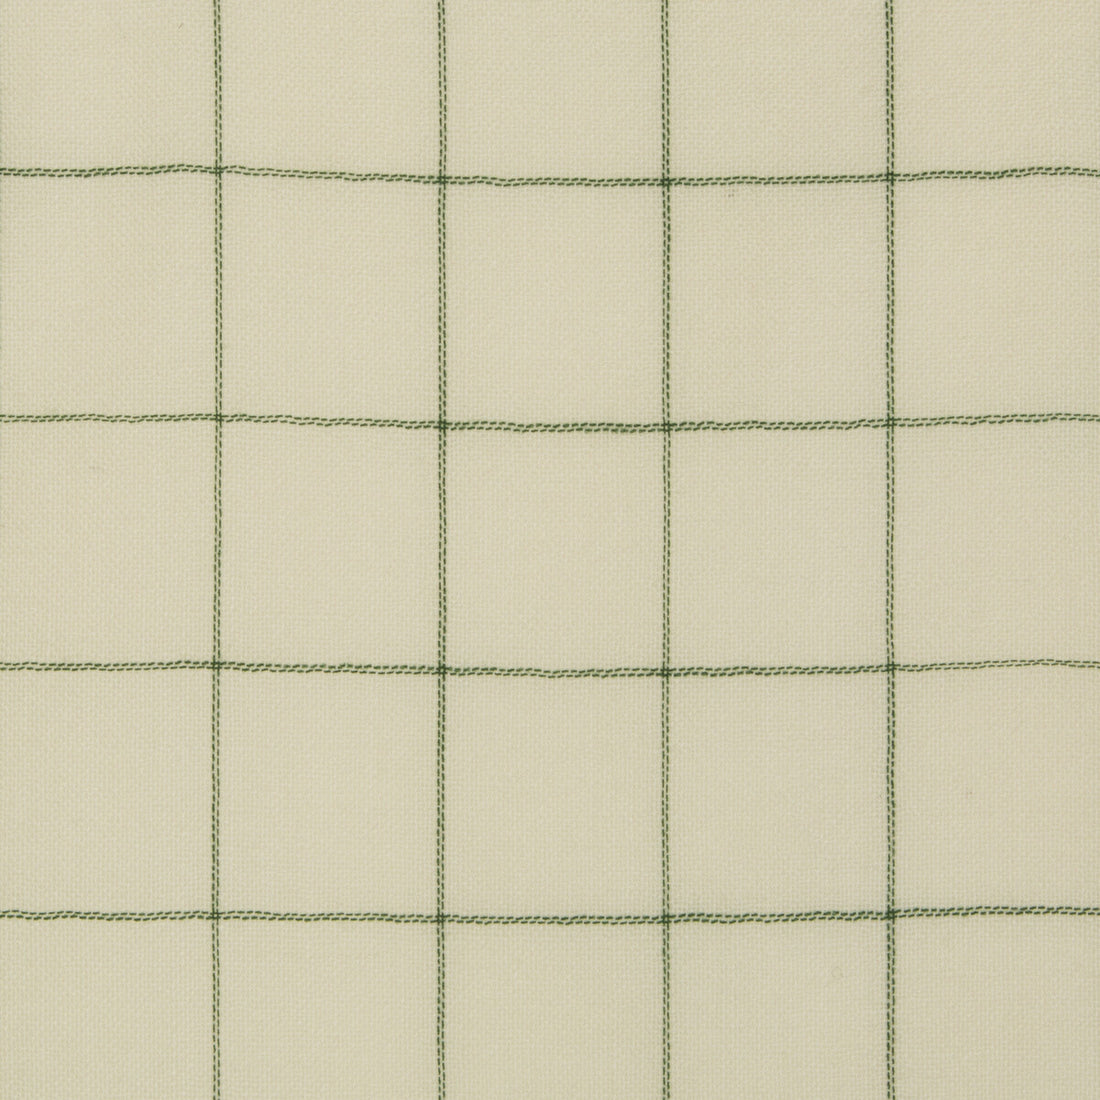 Mackay Sheer fabric in cedar green color - pattern 2017110.30.0 - by Lee Jofa in the Helmsdale Sheers collection